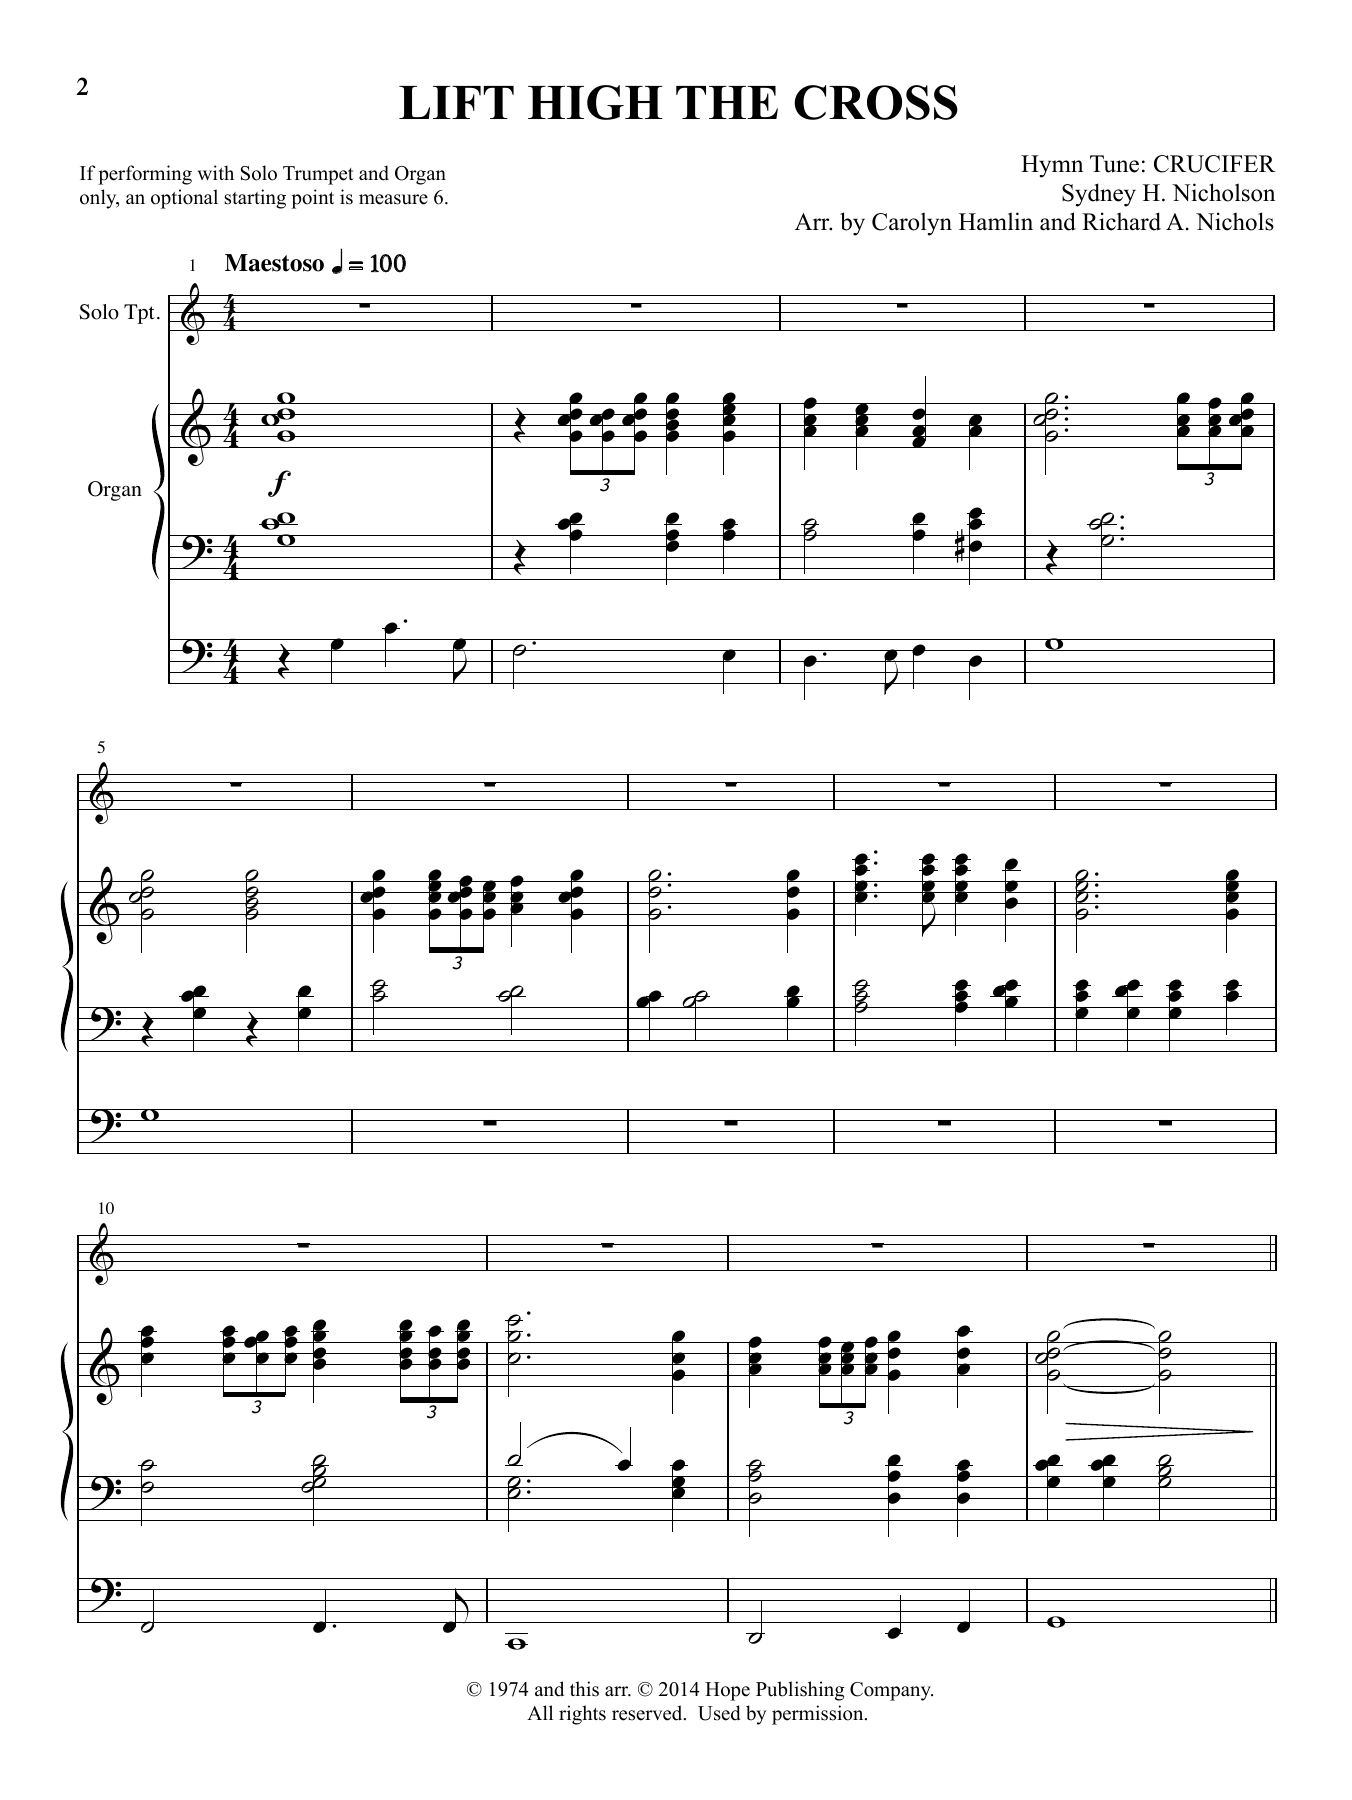 Sydney H. Nicholson Lift High the Cross (arr. Carolyn Hamlin and Richard A. Nichols) Sheet Music Notes & Chords for Organ - Download or Print PDF